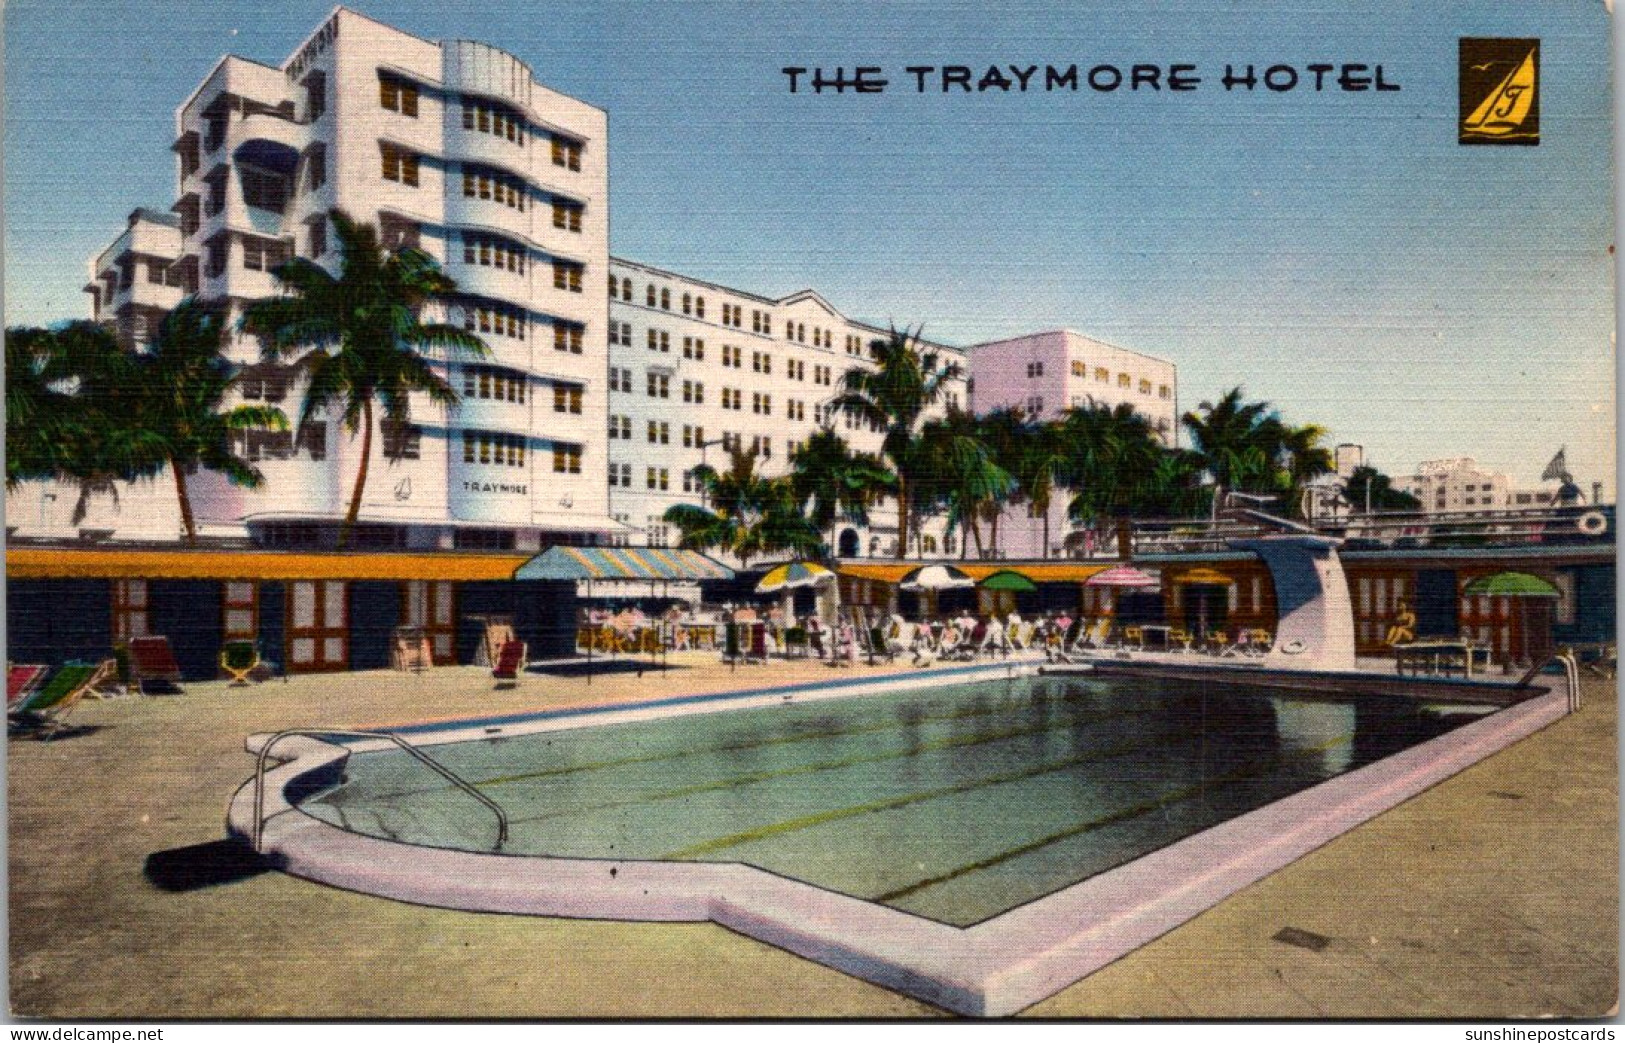 Florida Miami Beach The Traymore Hotel Beach Pool And Cabana Club - Miami Beach